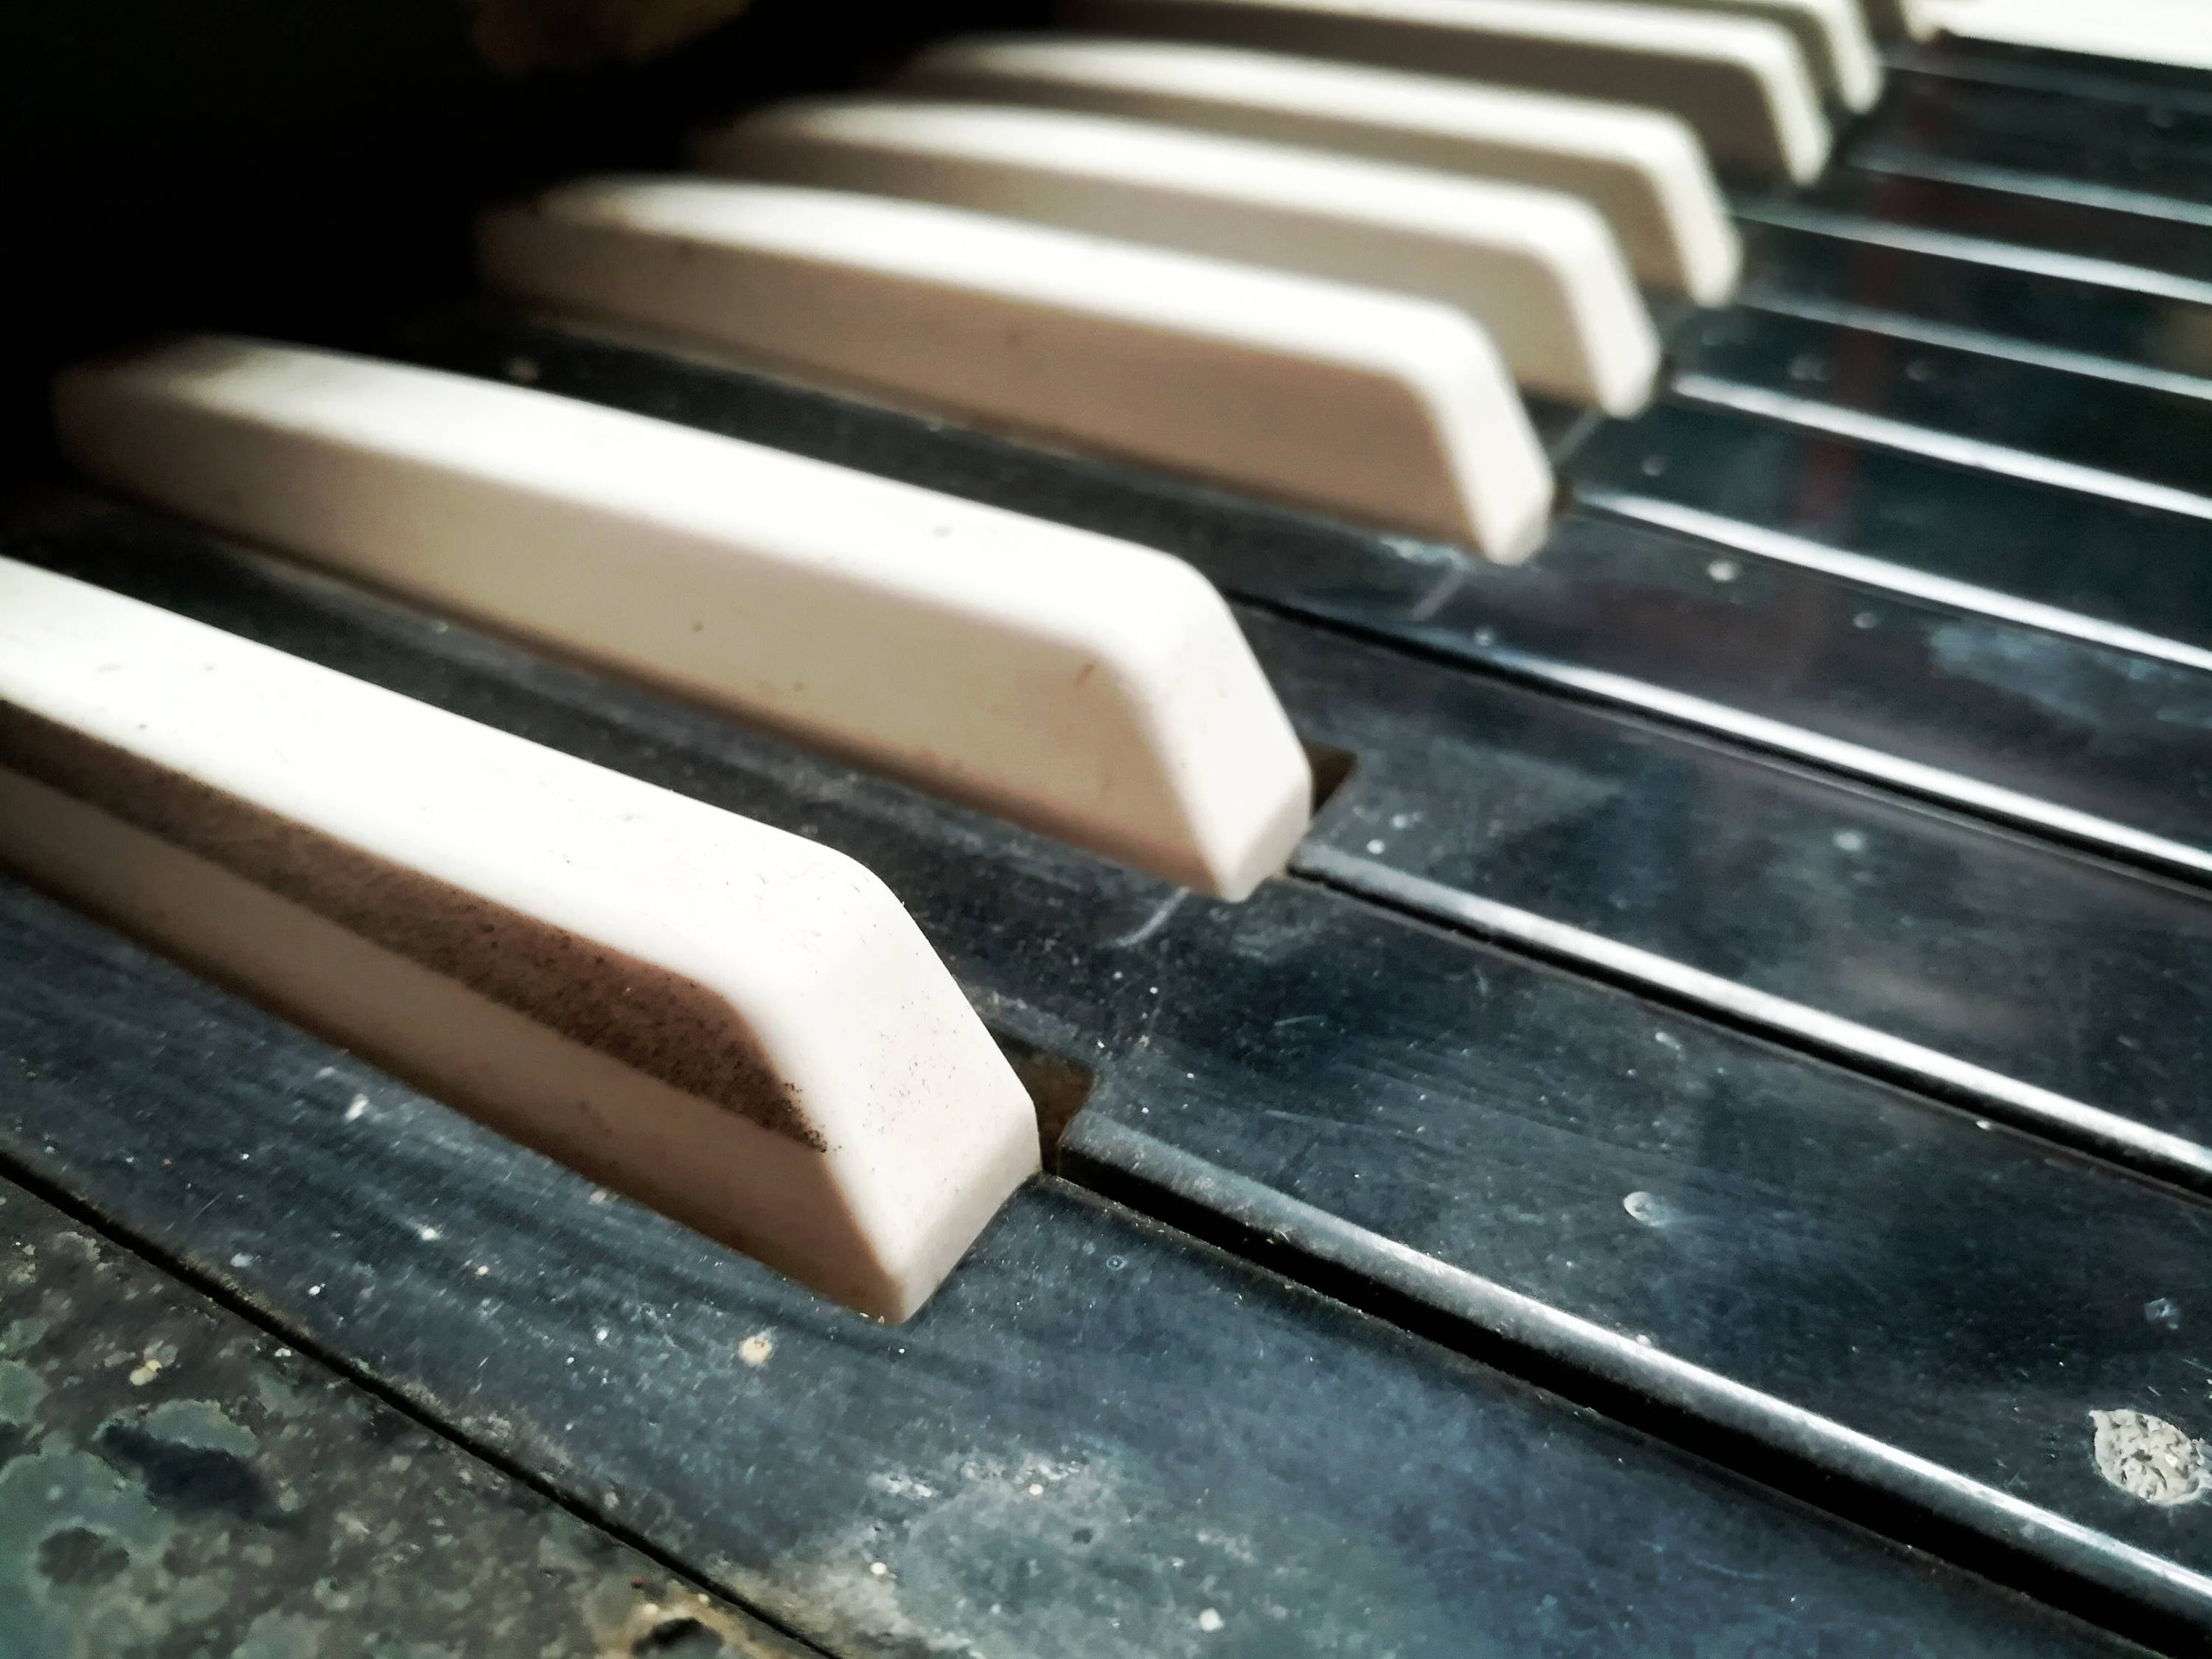 Vintage ebony wood piano keys